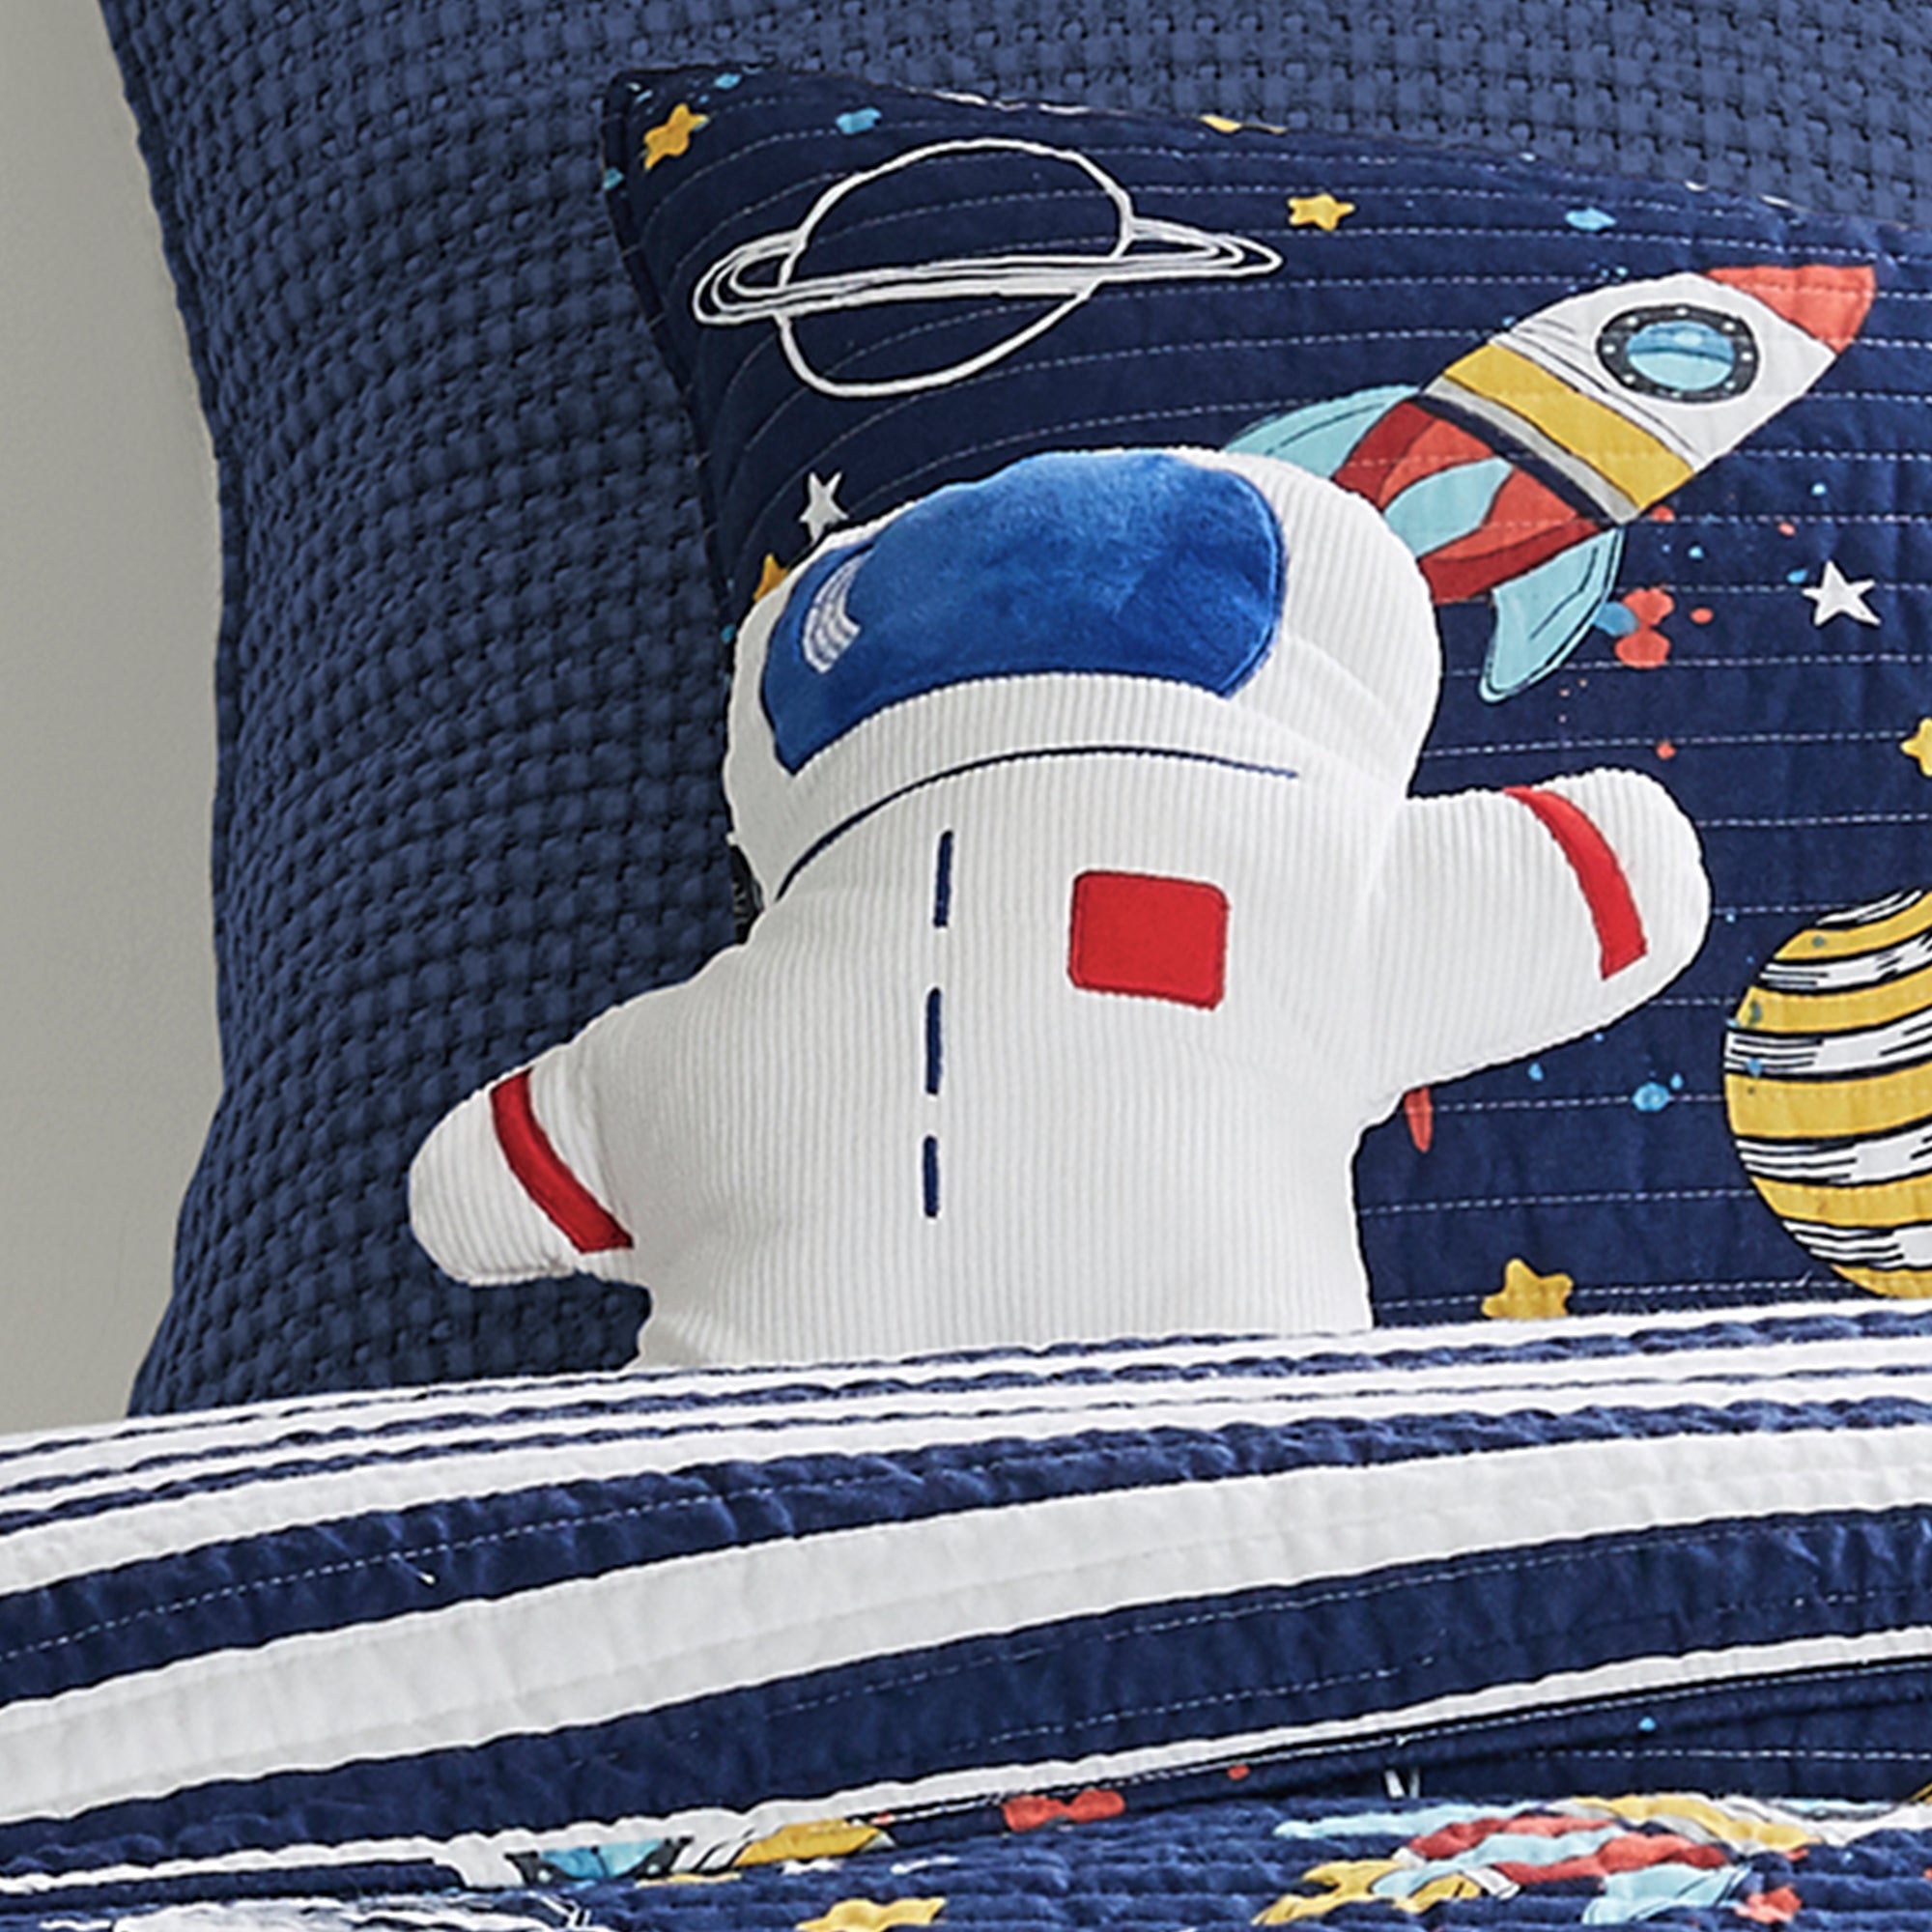 Galaxy Astronaut Shaped Pillow